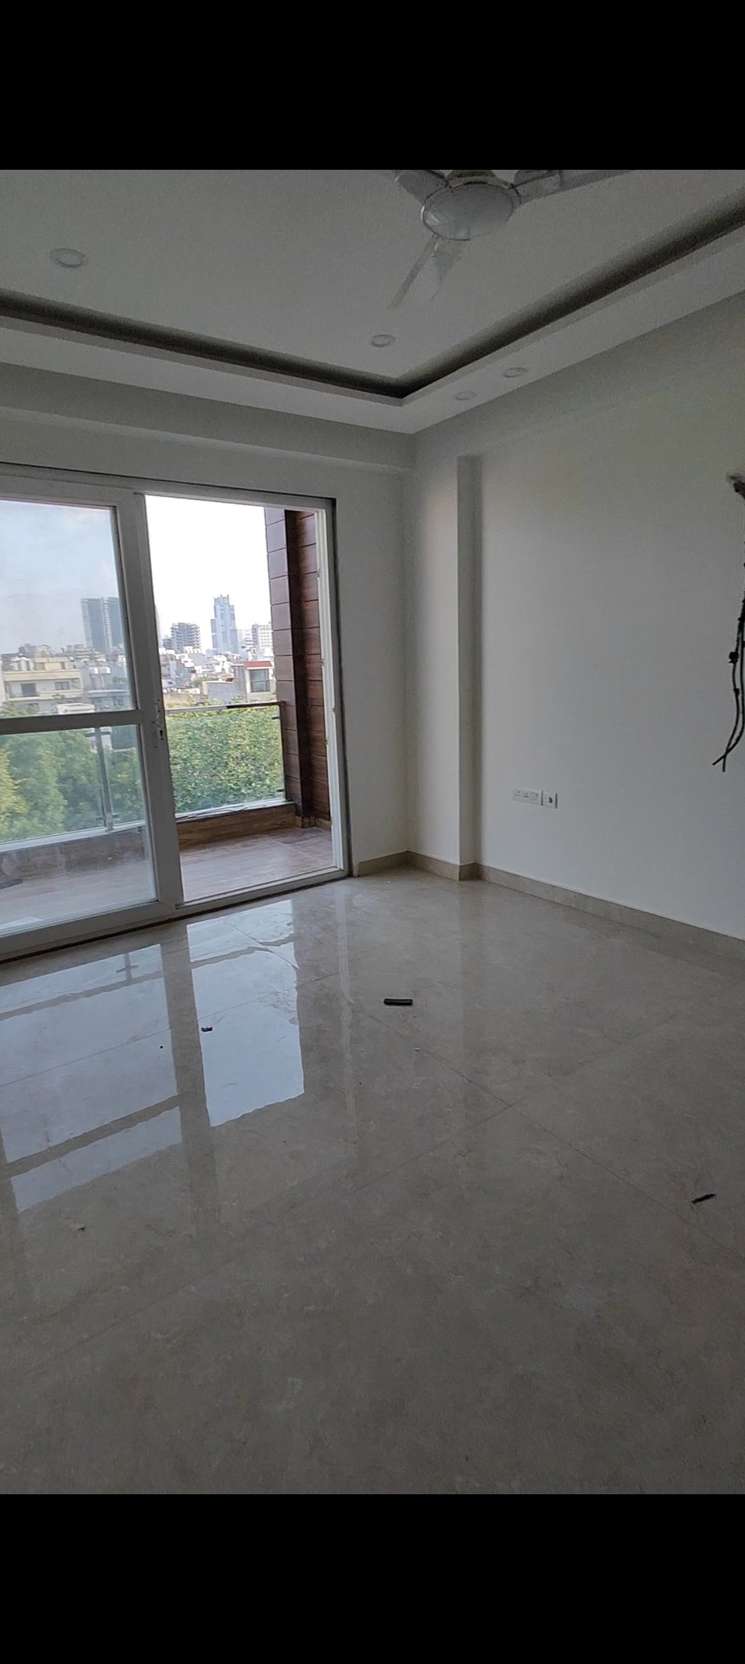 3.5 Bedroom 304 Sq.Yd. Builder Floor in Sector 55 Gurgaon